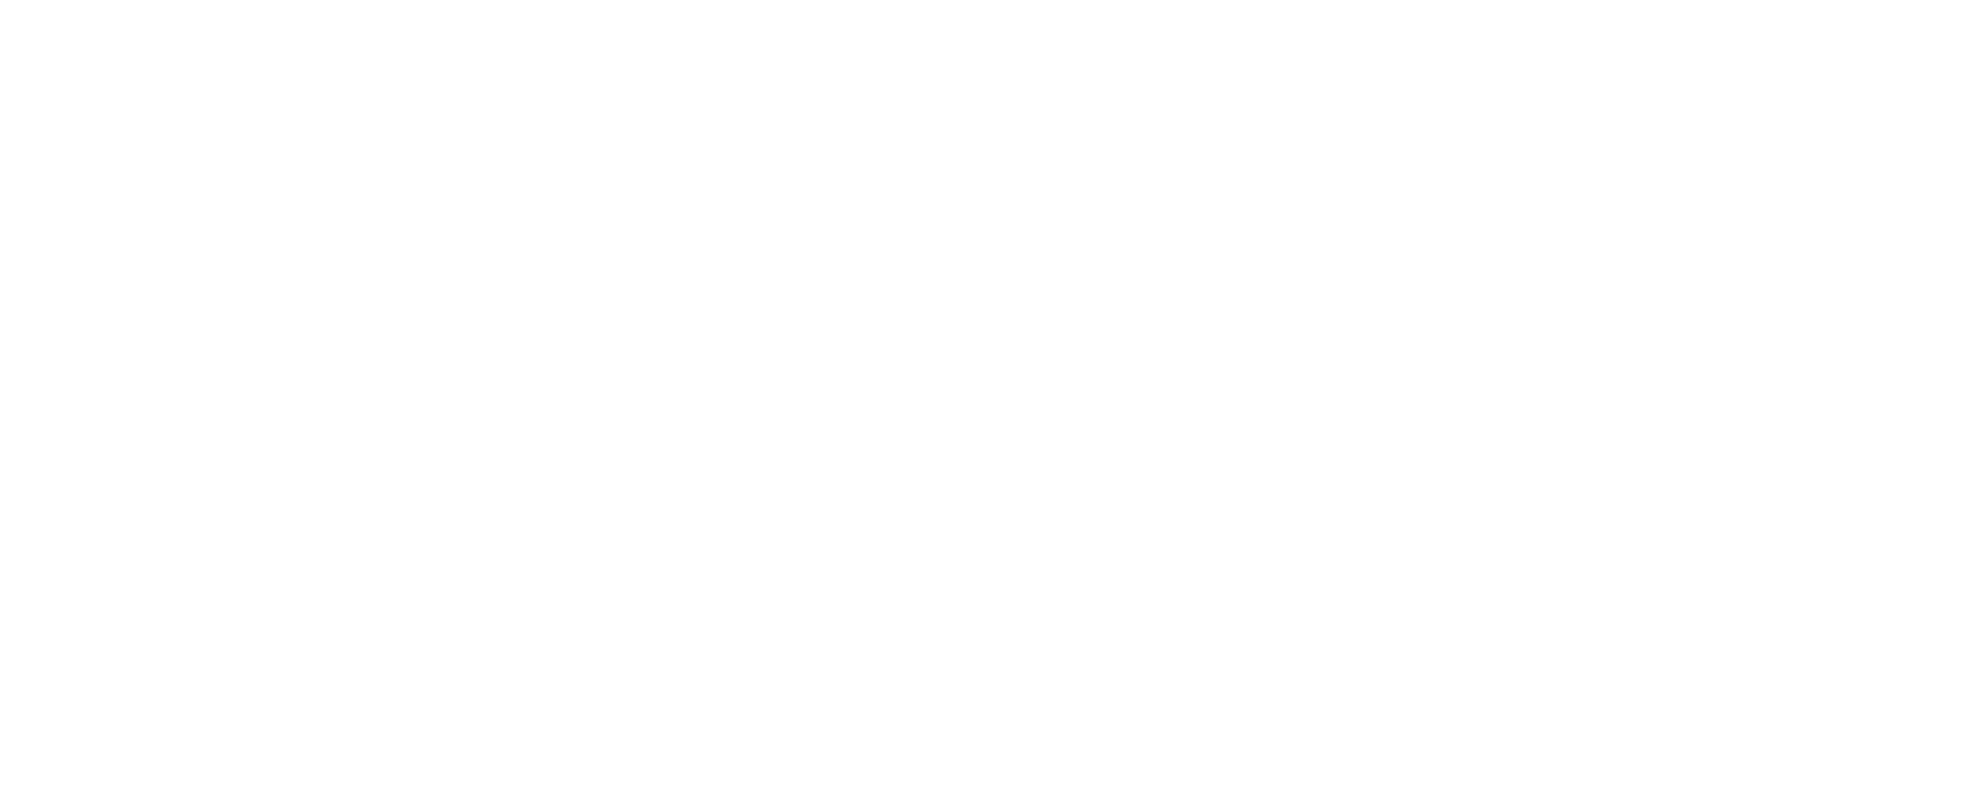 Squire & Co.